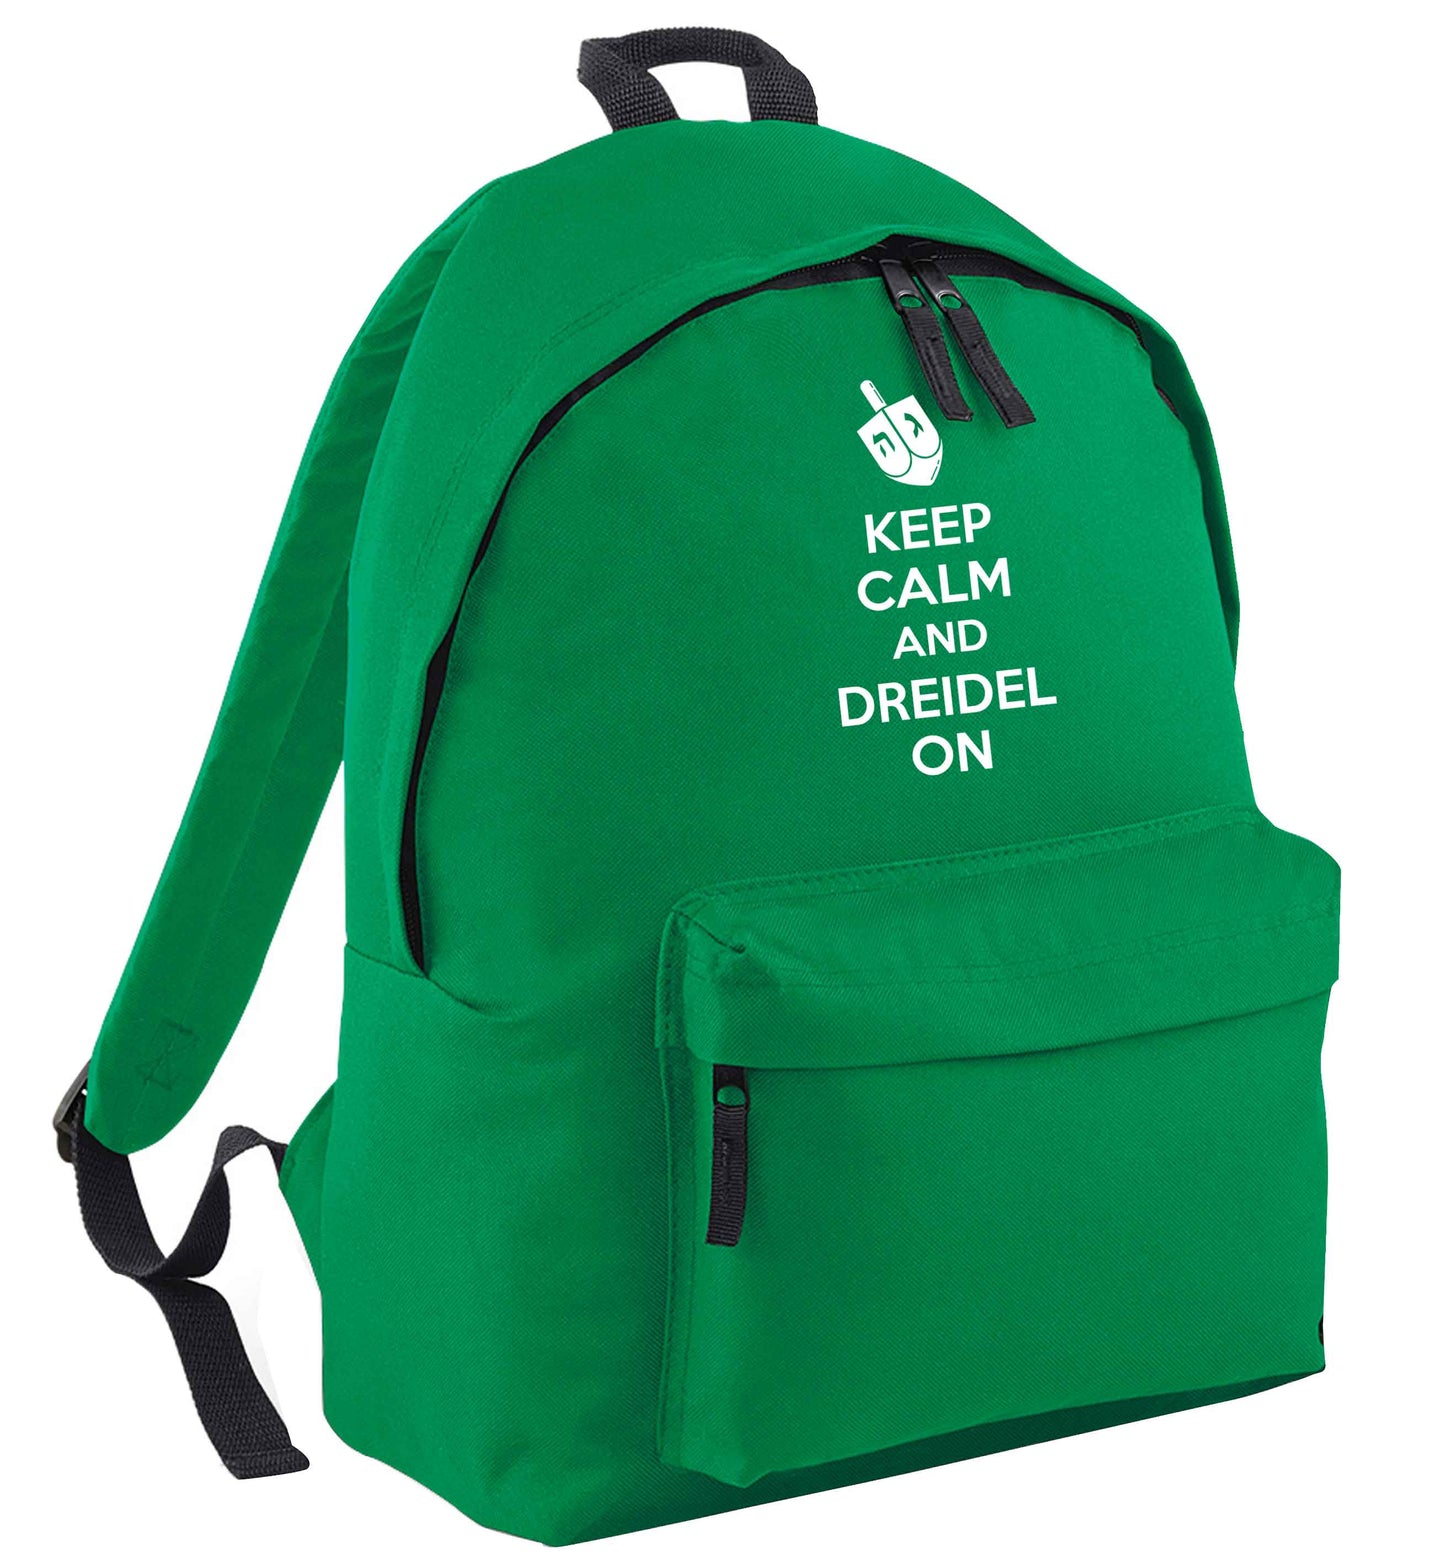 Keep calm and dreidel on green adults backpack